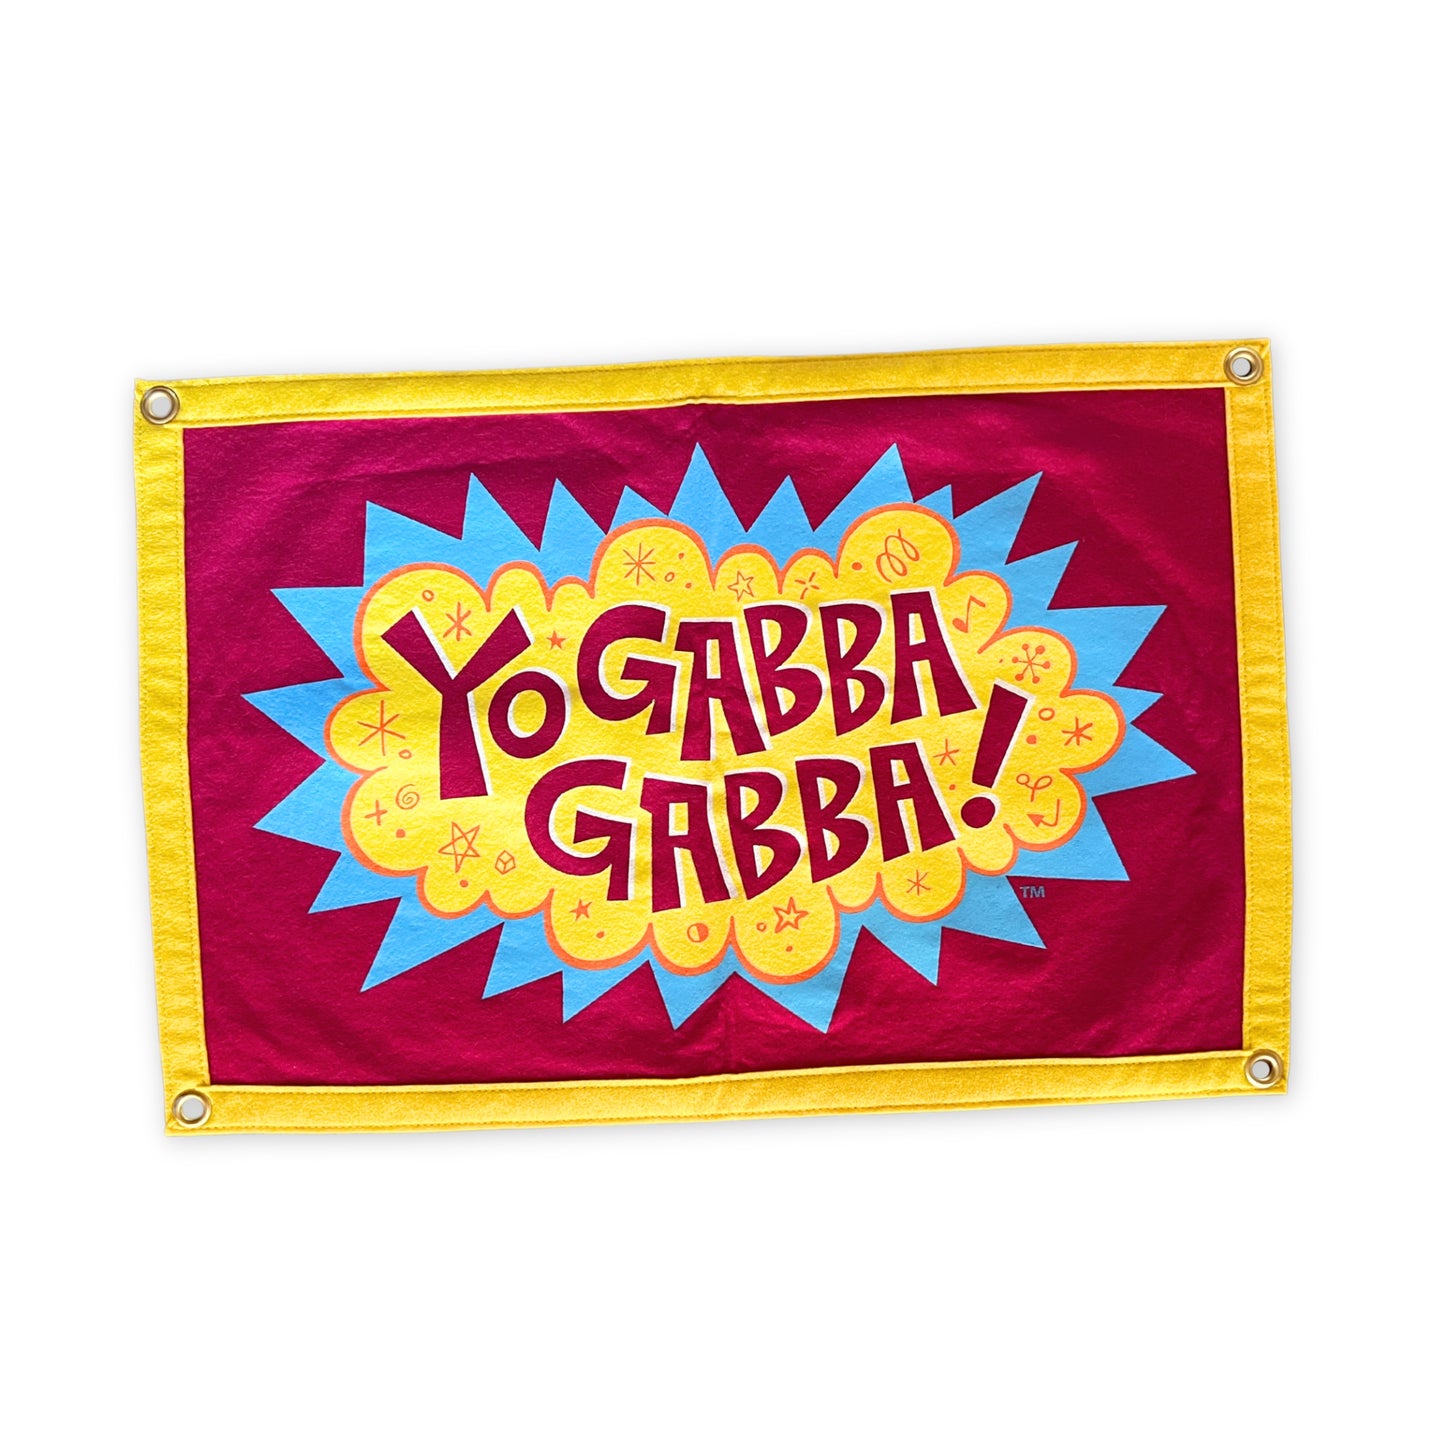 Yo Gabba Gabba! Camp Flag by Oxford Pennant!